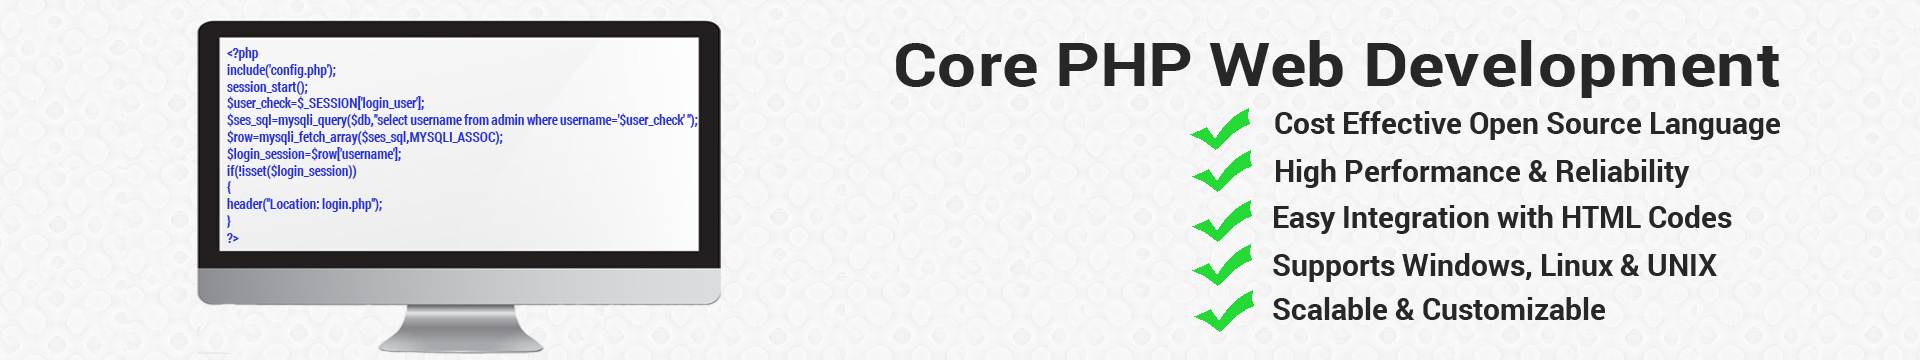 Core PHP Web Development